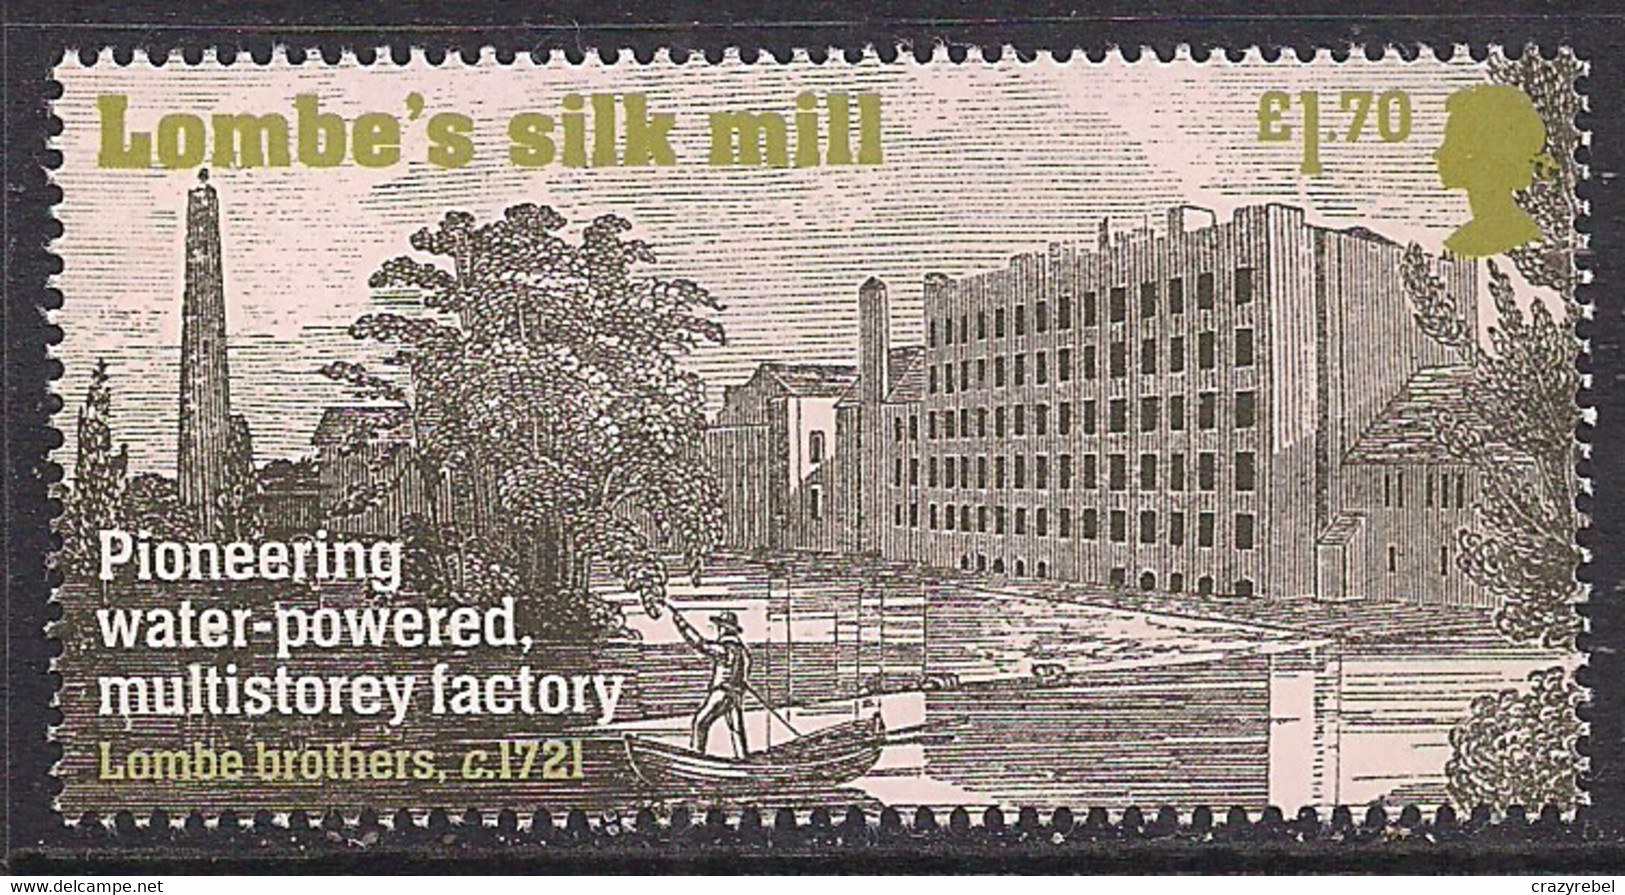 GB 2021 QE2 £1.70 Industrial Revolution Lombes Silk Mill Umm ( M1016 ) - Neufs